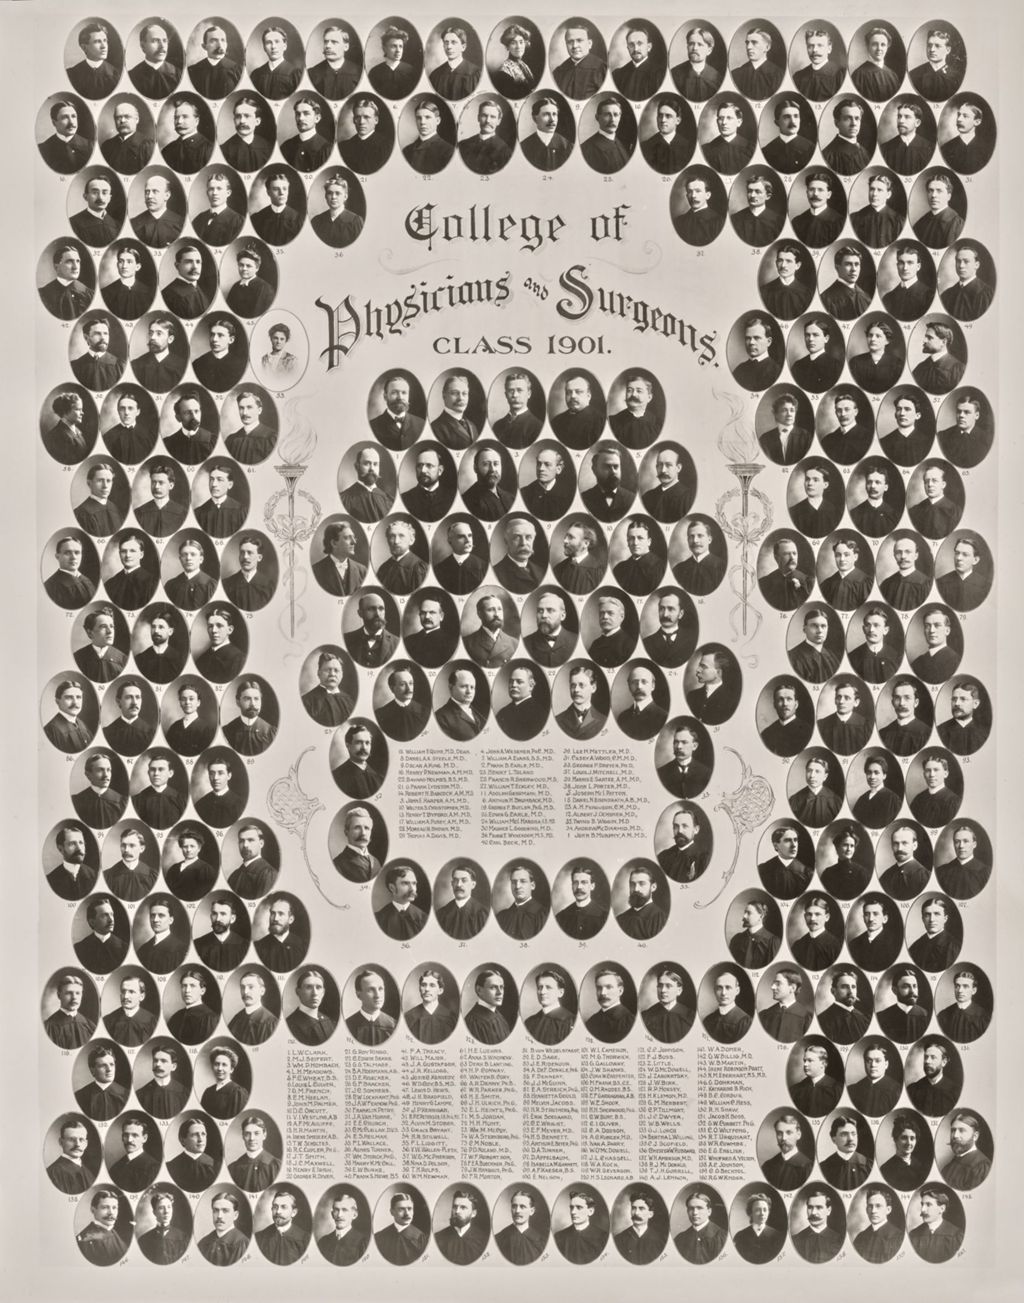 Miniature of 1901 graduating class, University of Illinois College of Medicine